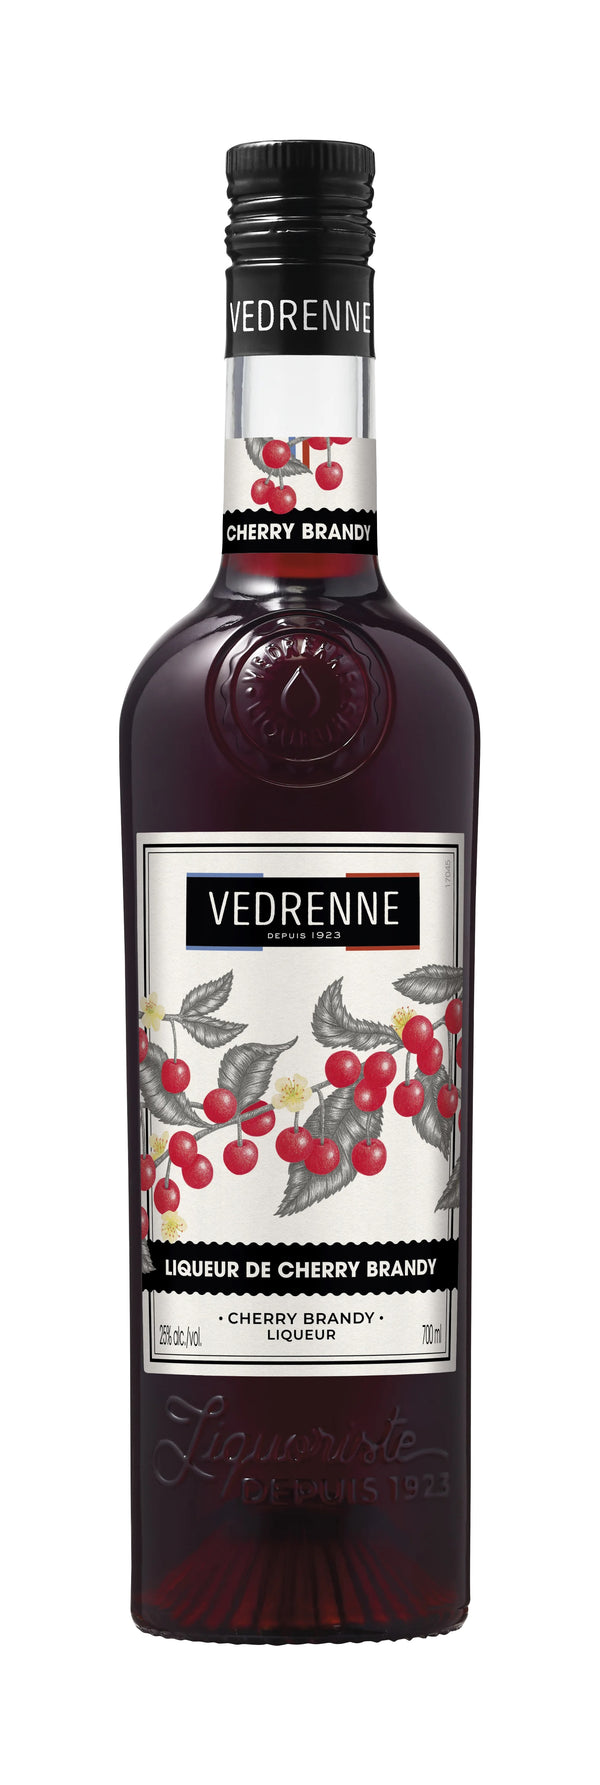 Vedrenne Cherry Brandy Liqueur 70cl Bottle